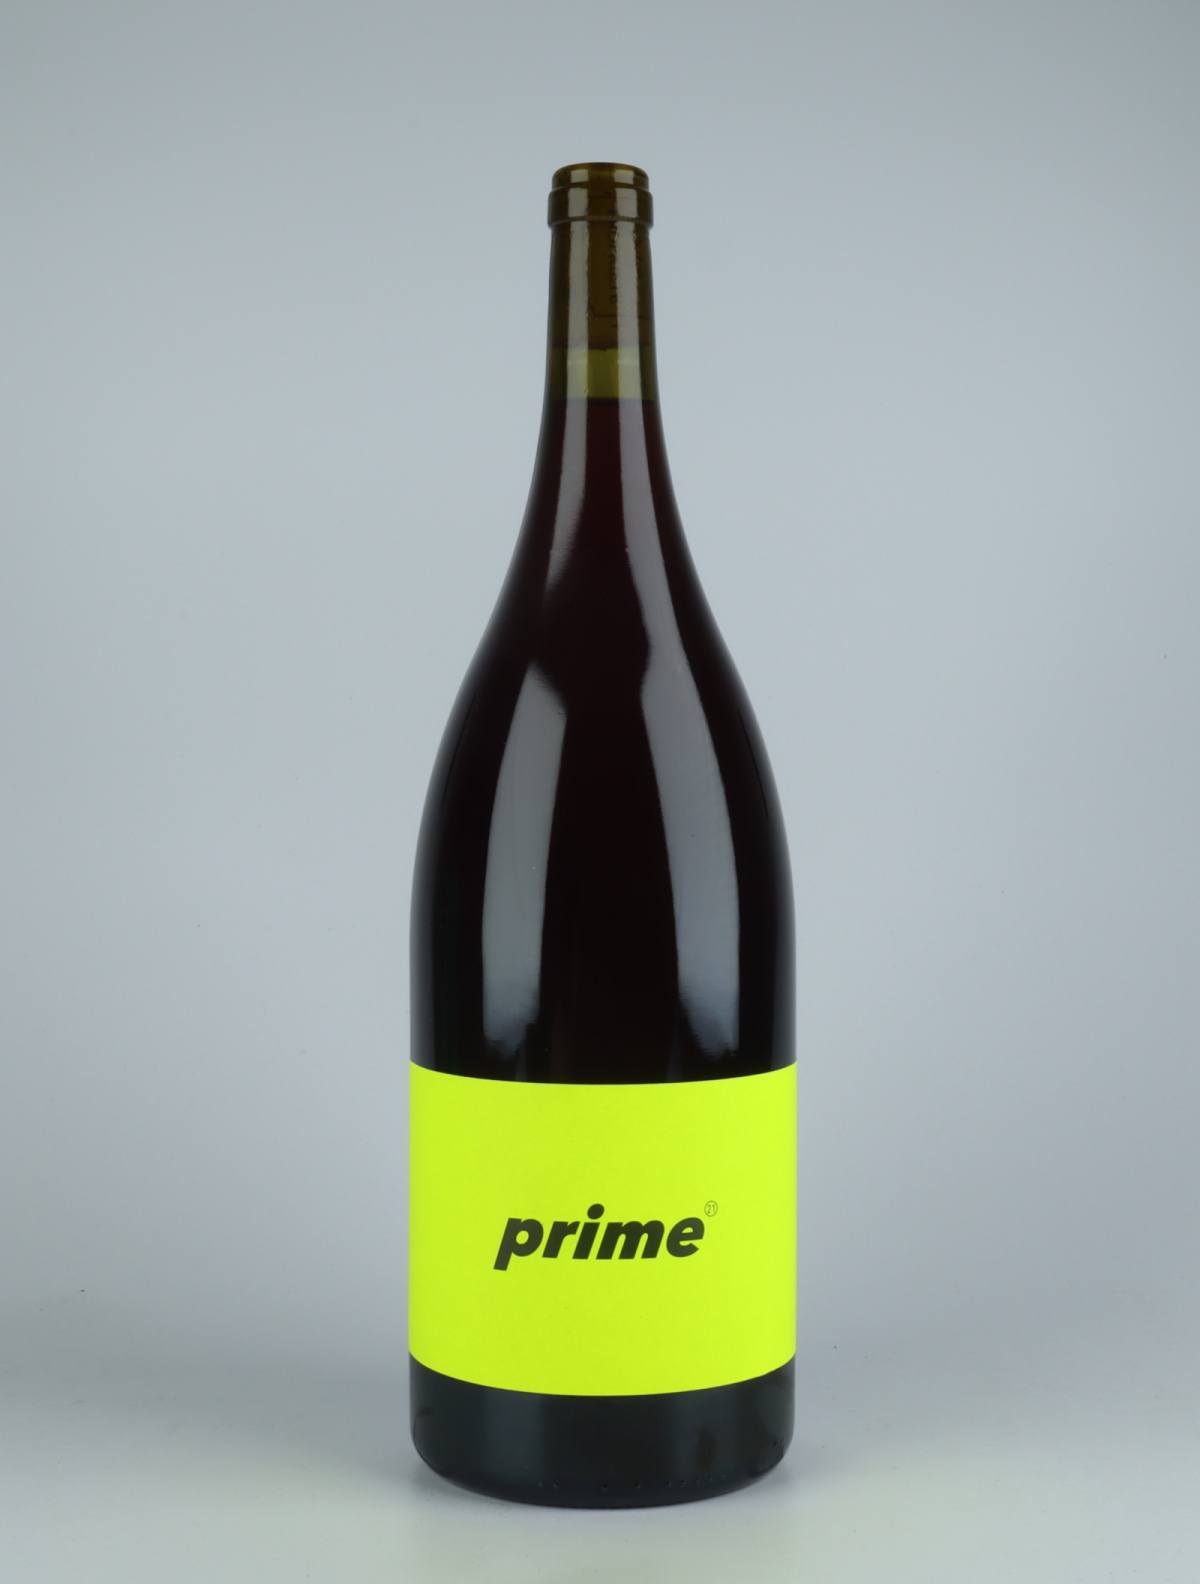 A bottle 2021 Prime Red wine from Les Frères Soulier, Rhône in France